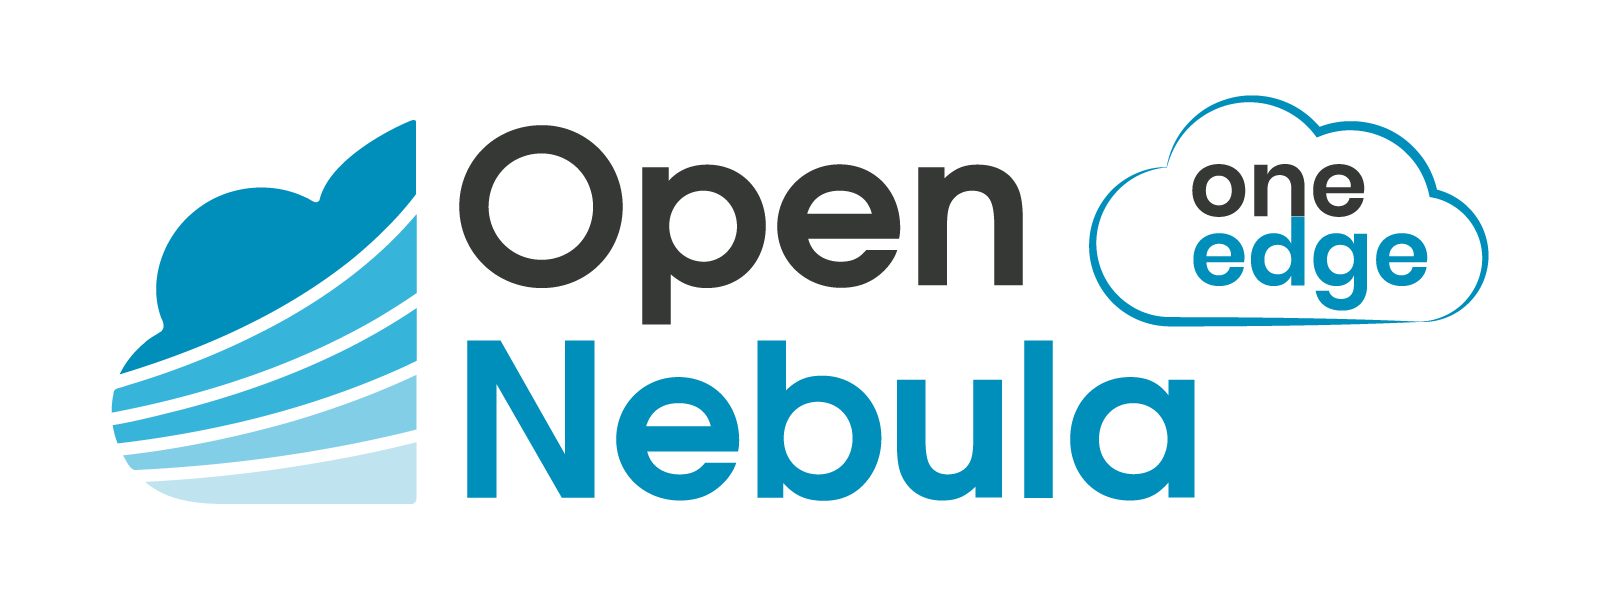 OpenNebula